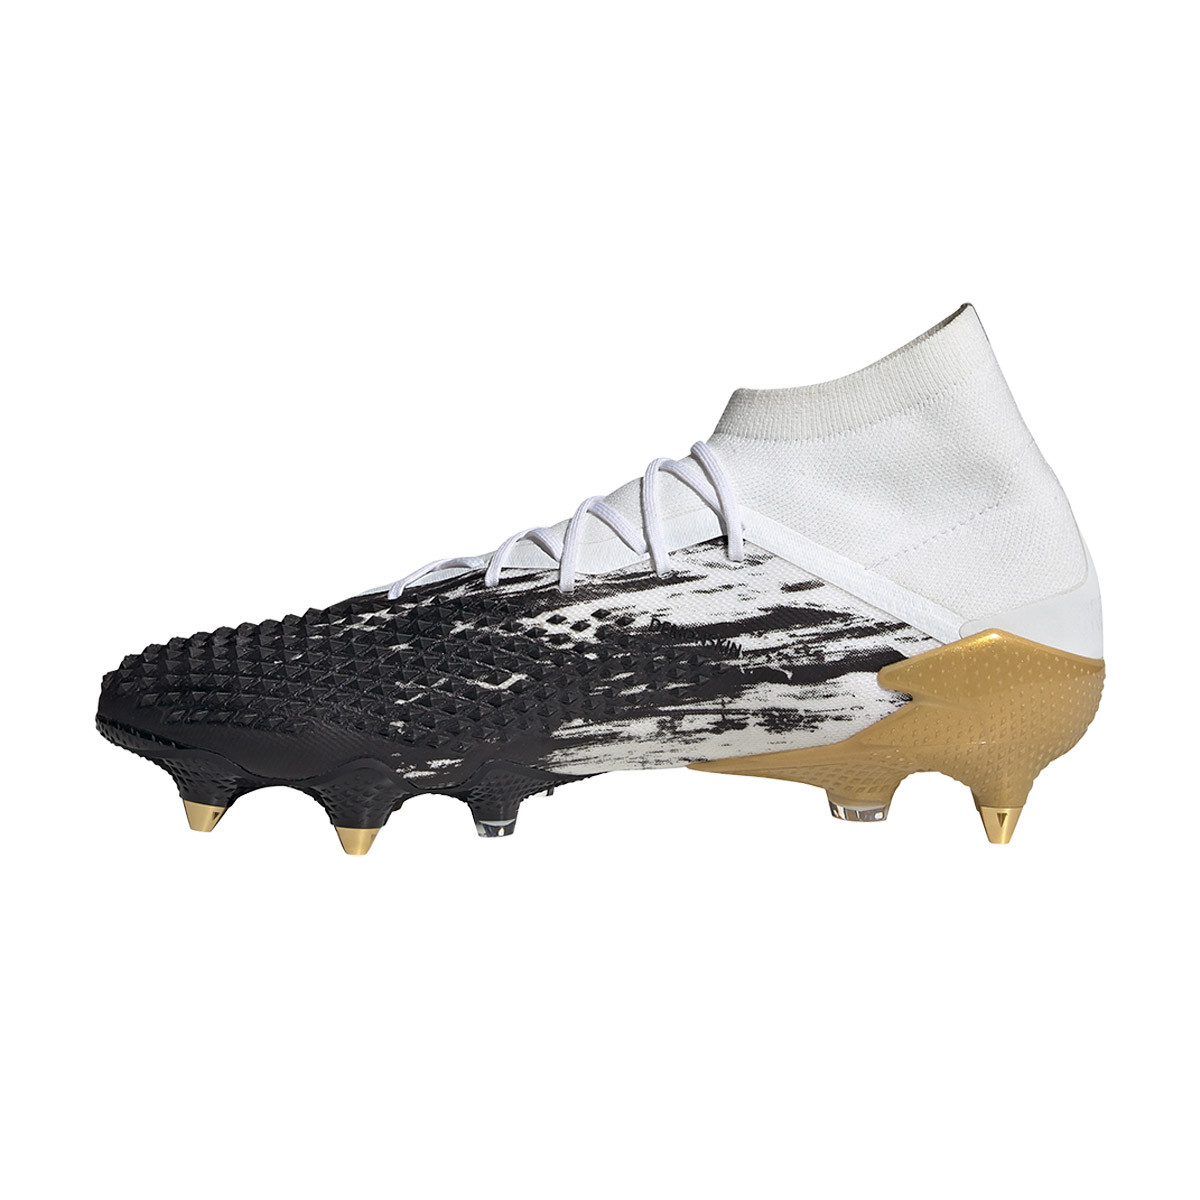 New adidas Predator Instinct Football Boot 20th Anniversary.